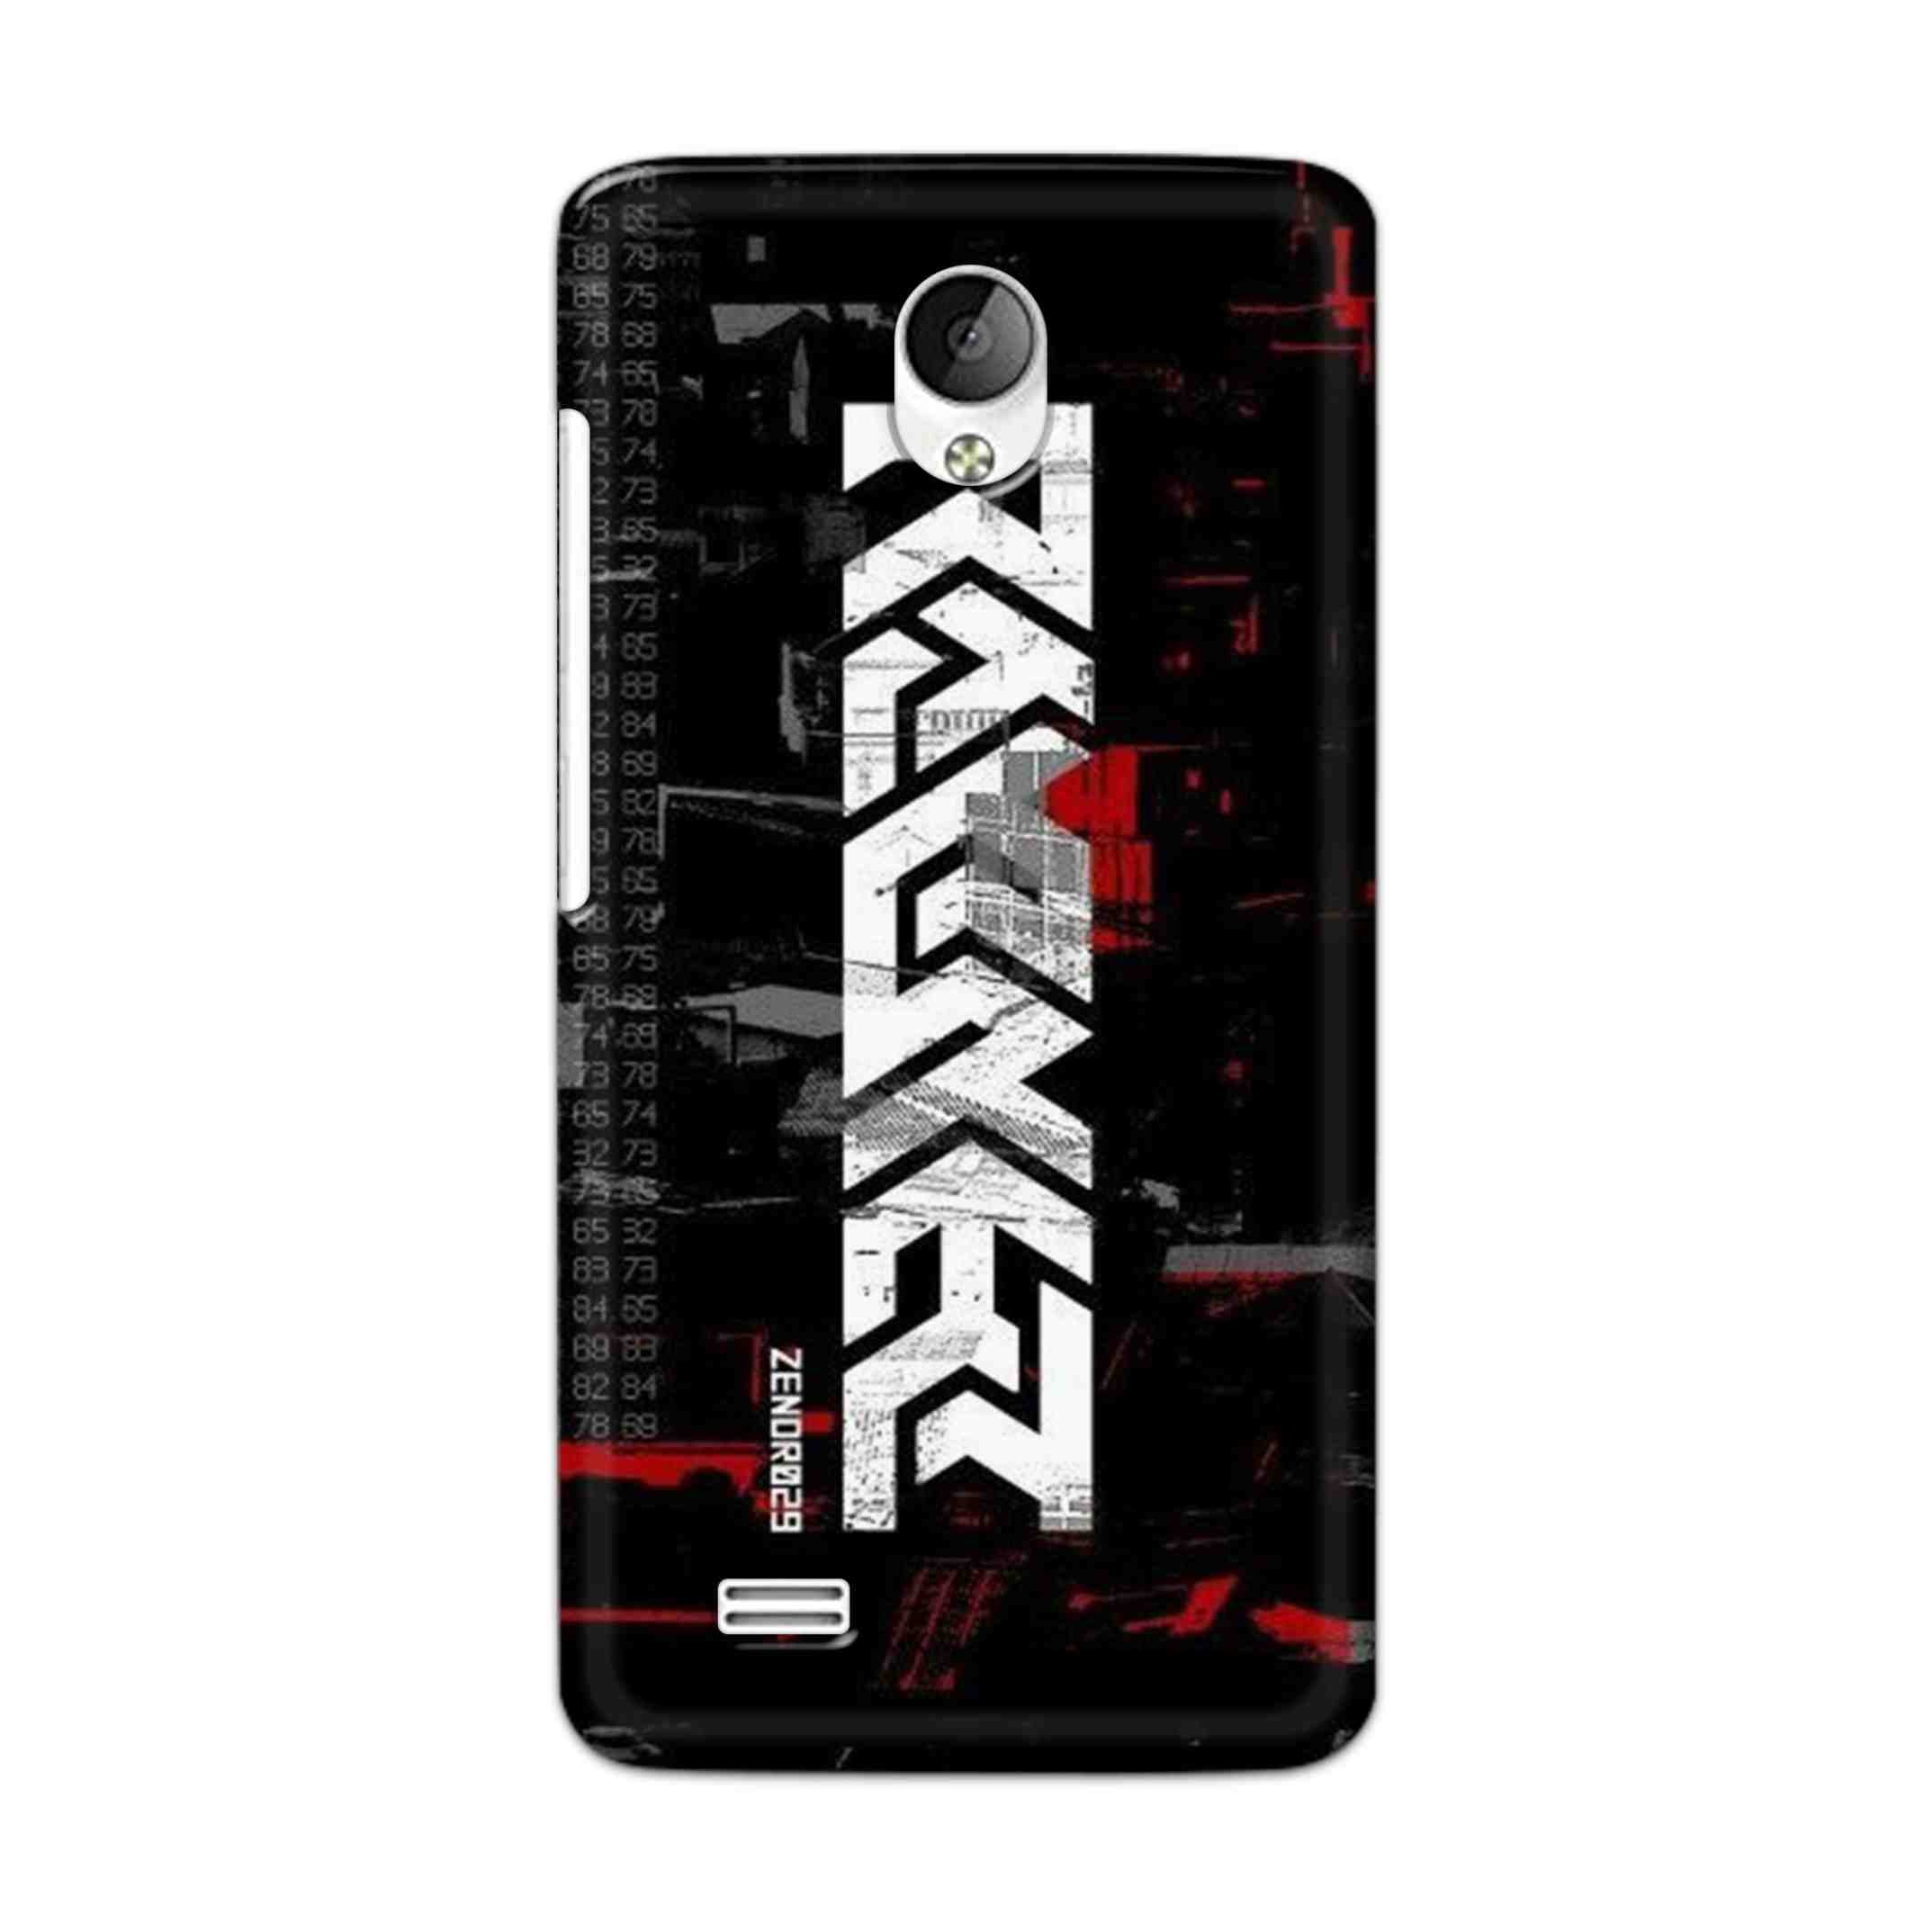 Buy Raxer Hard Back Mobile Phone Case Cover For Vivo Y21 / Vivo Y21L Online